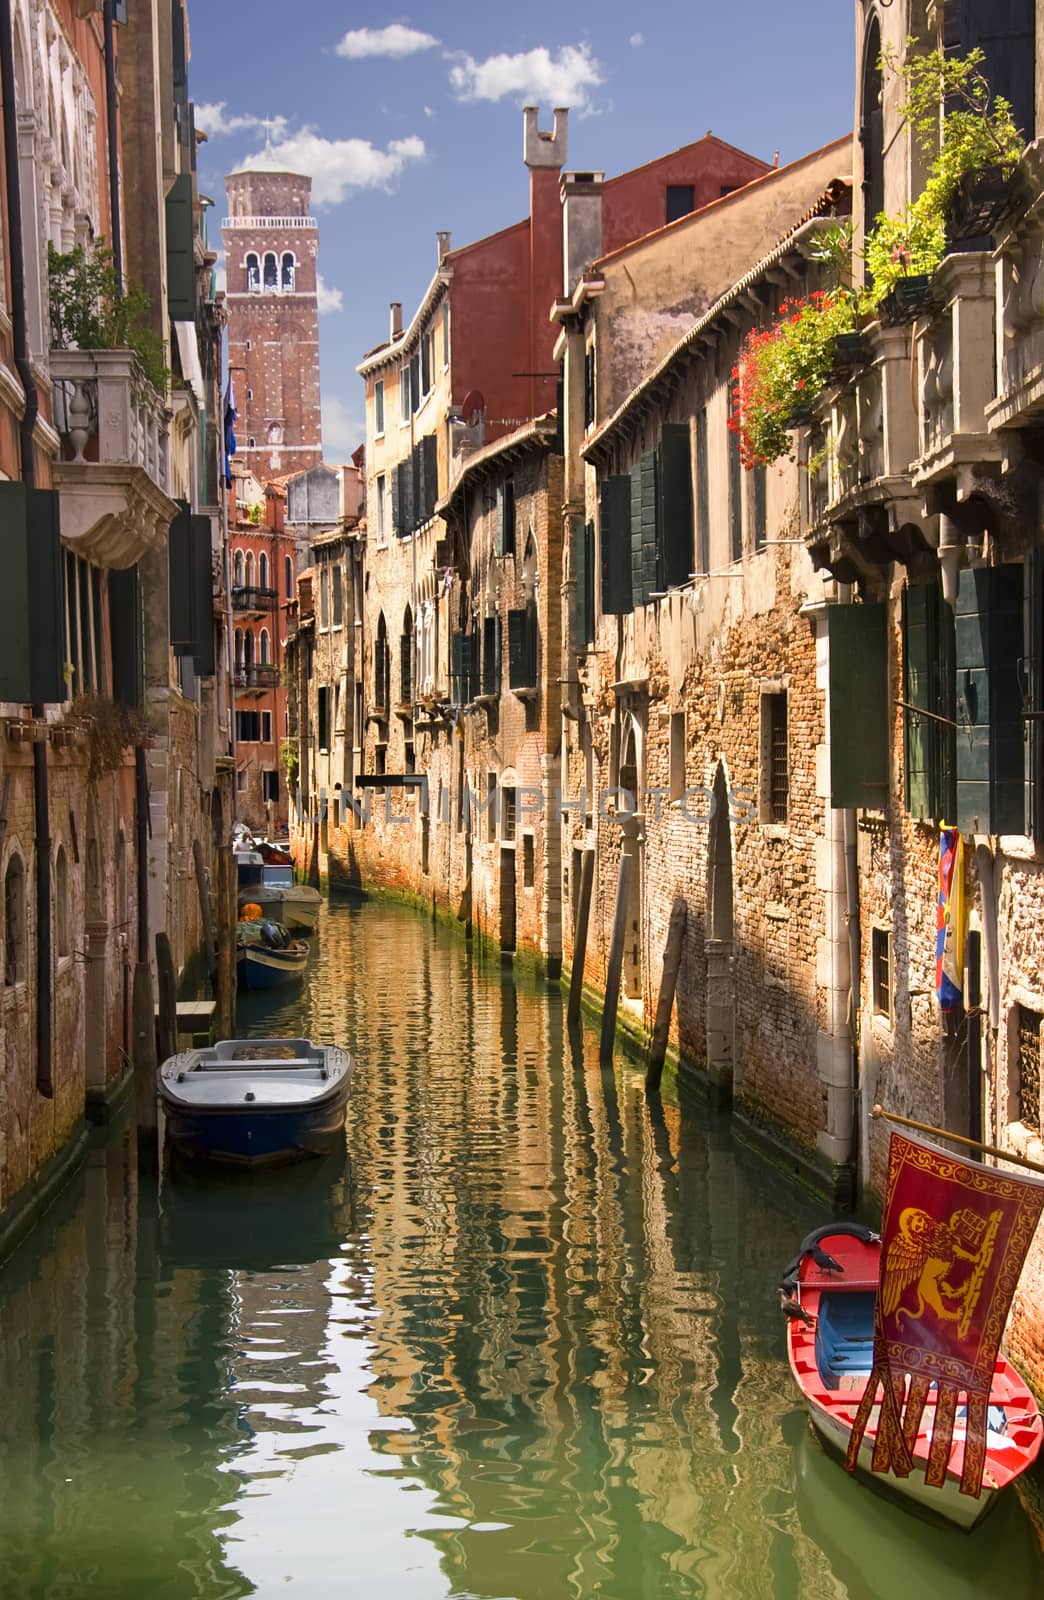 Canals in Venice by fotoecho